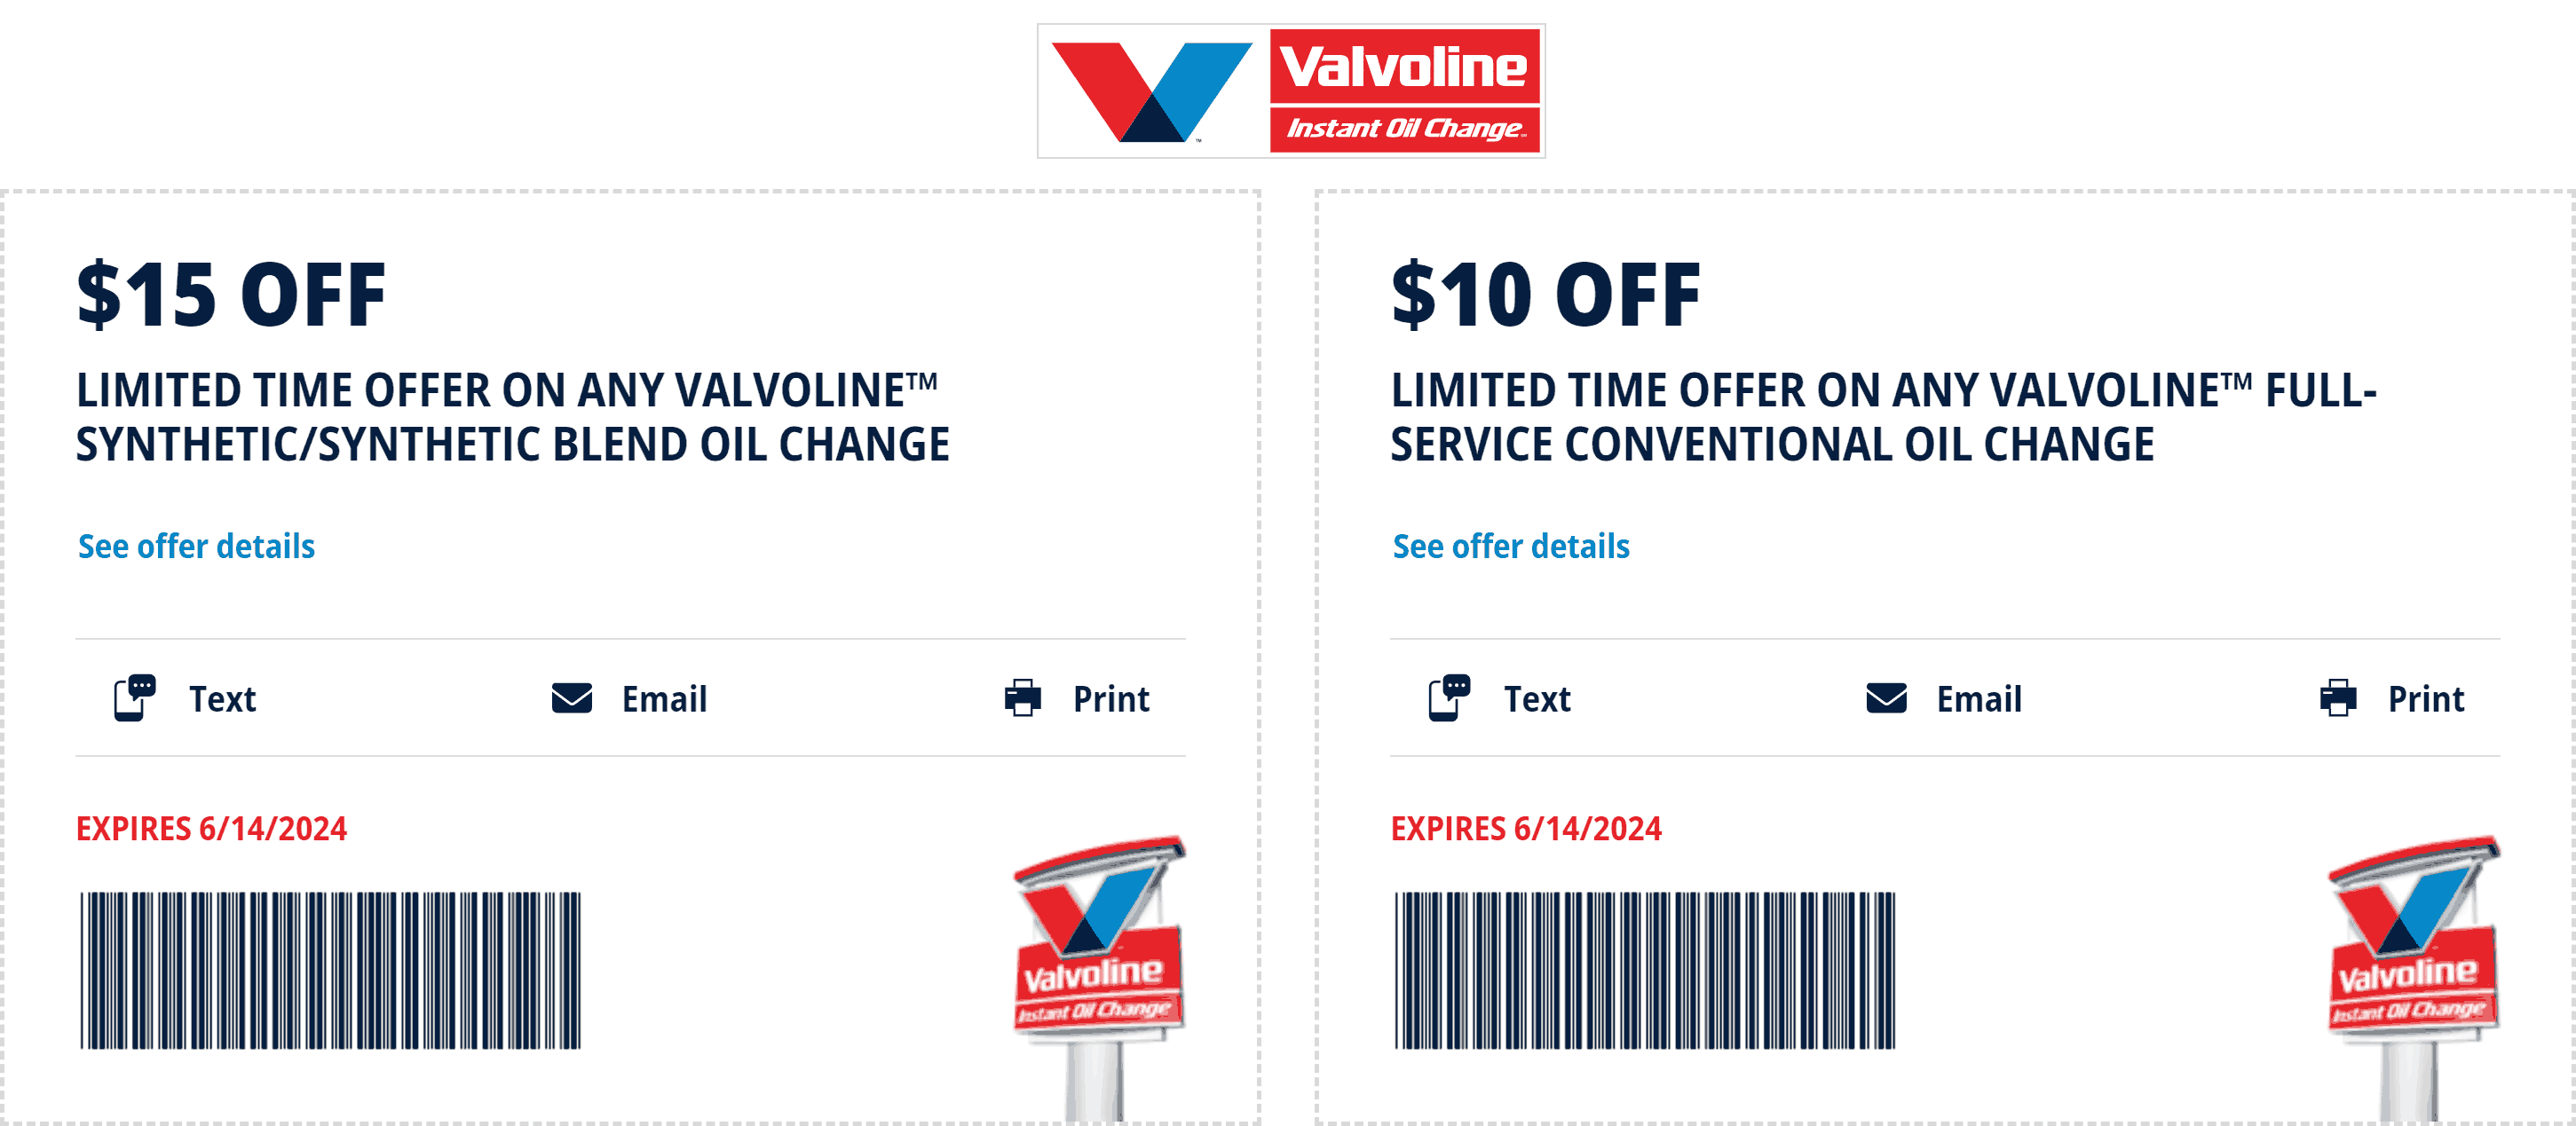 Valvoline stores Coupon  $10-$15 off an oil change at Valvoline #valvoline 